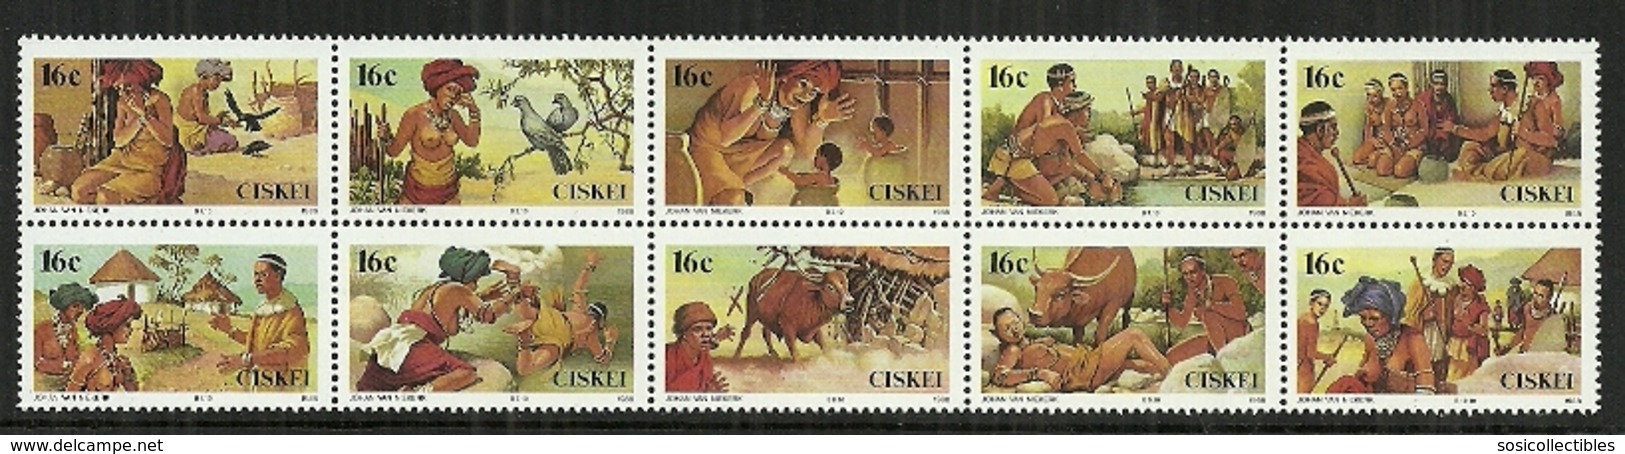 Ciskei - 1988 Folklore Full Set Of 10 MNH - Ciskei